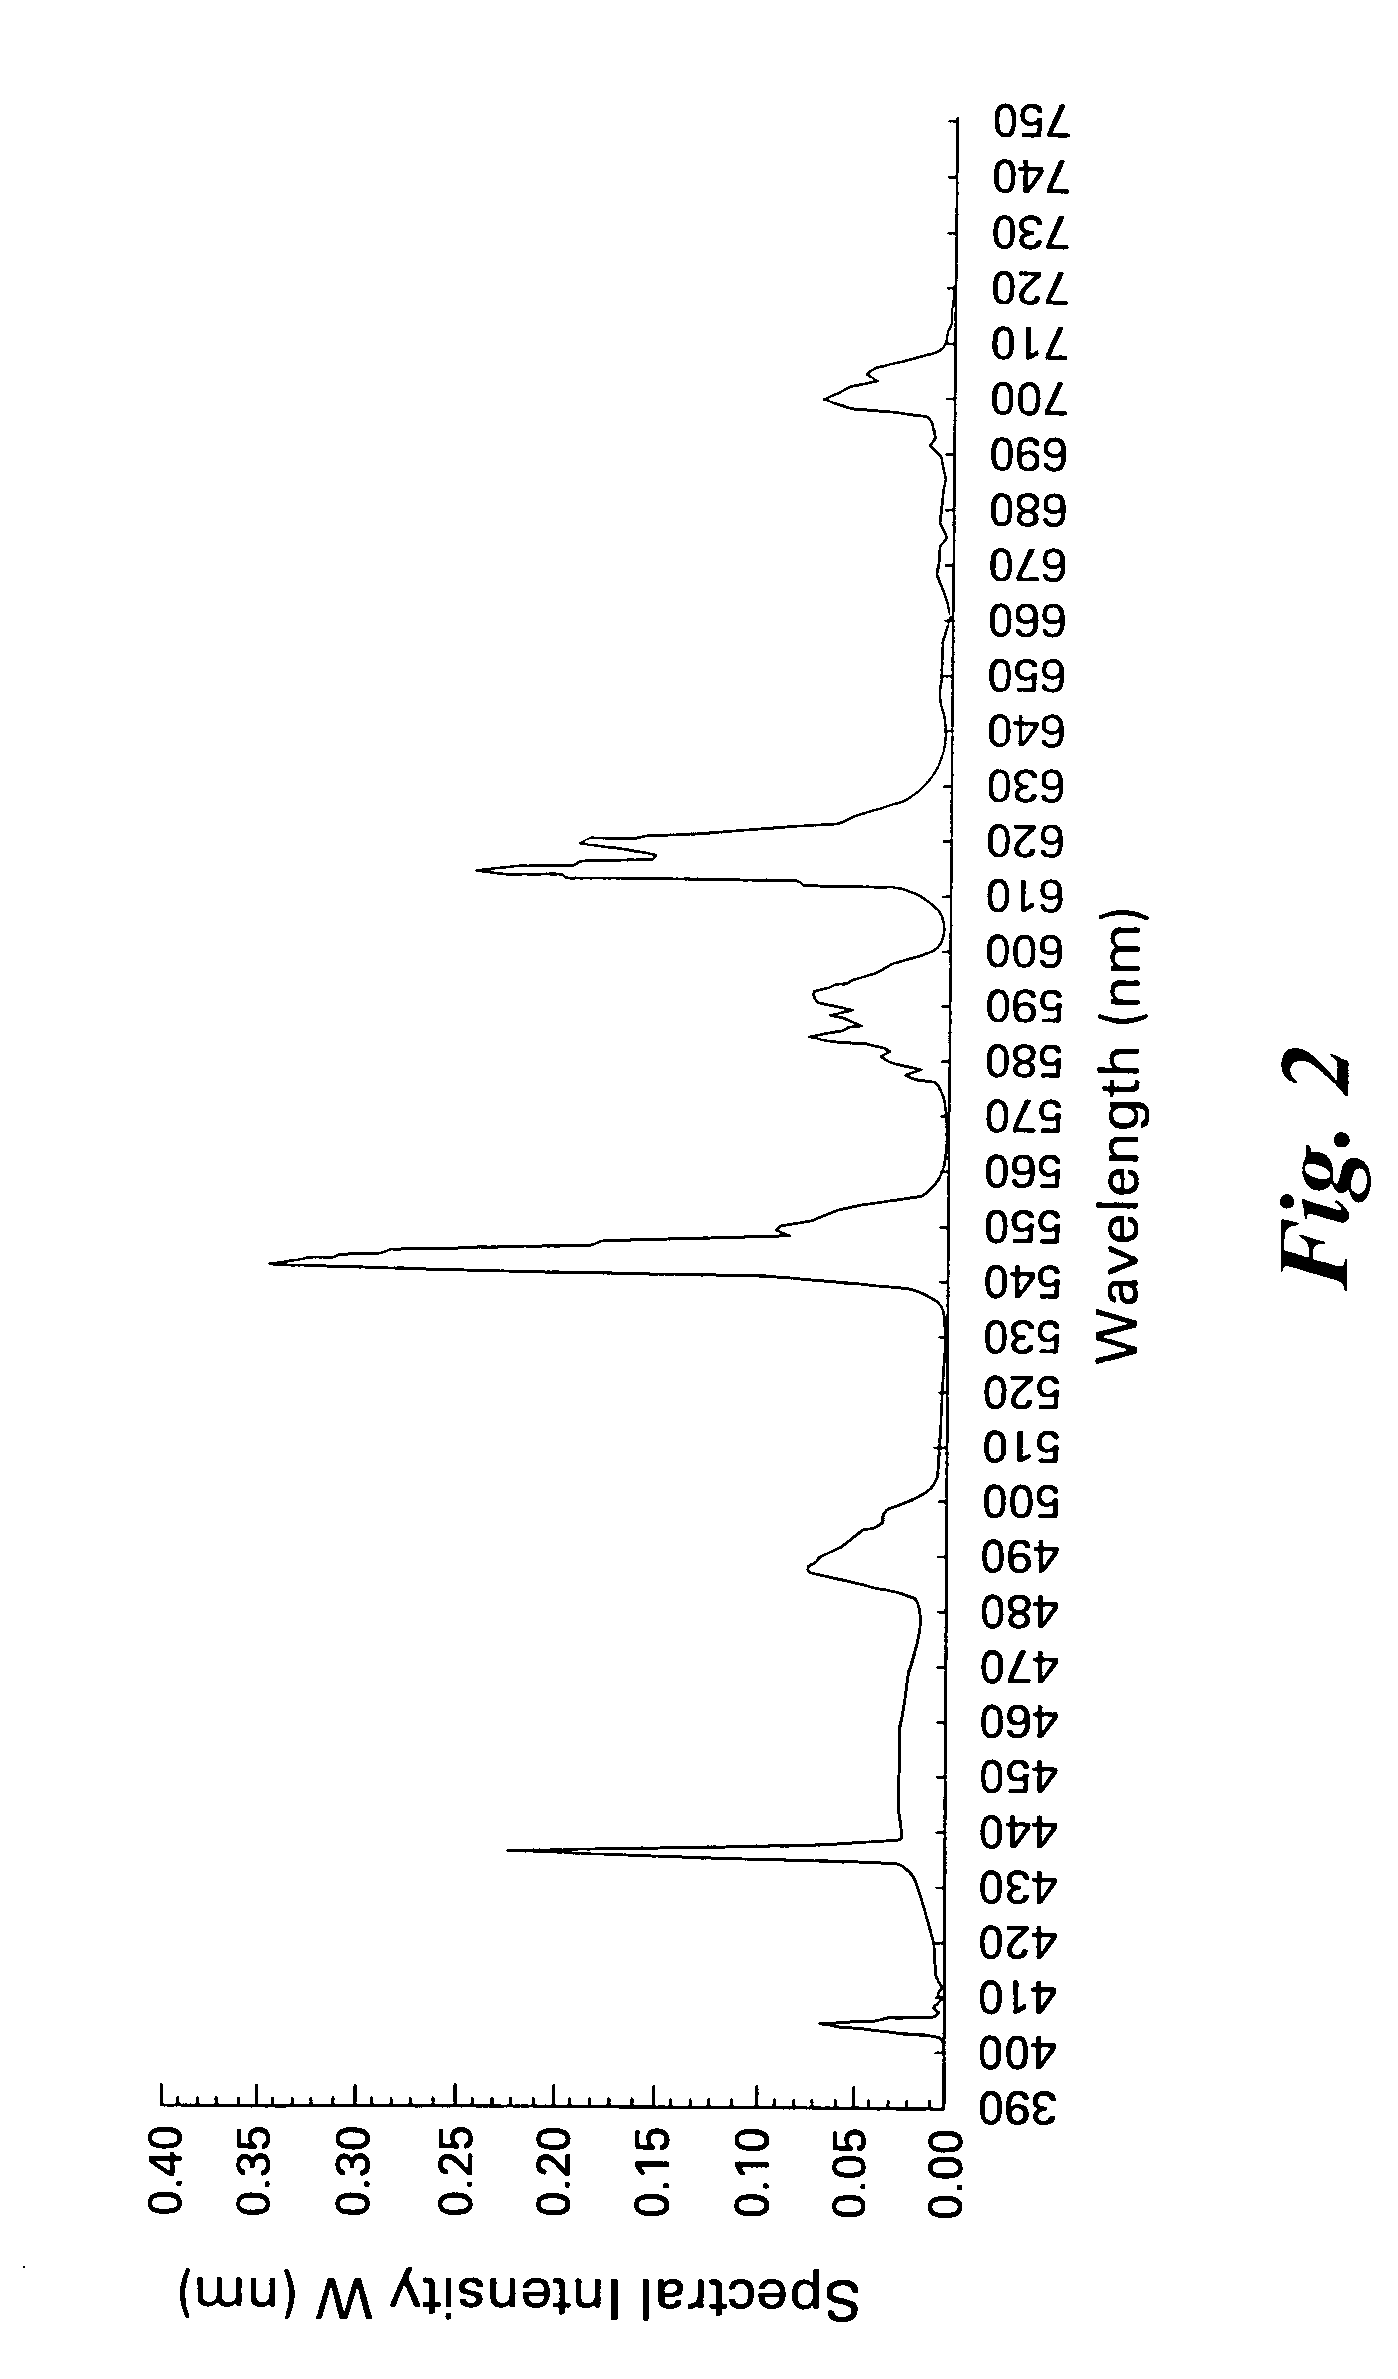 Phosphors containing boron and metals of Group IIIA and IIIB